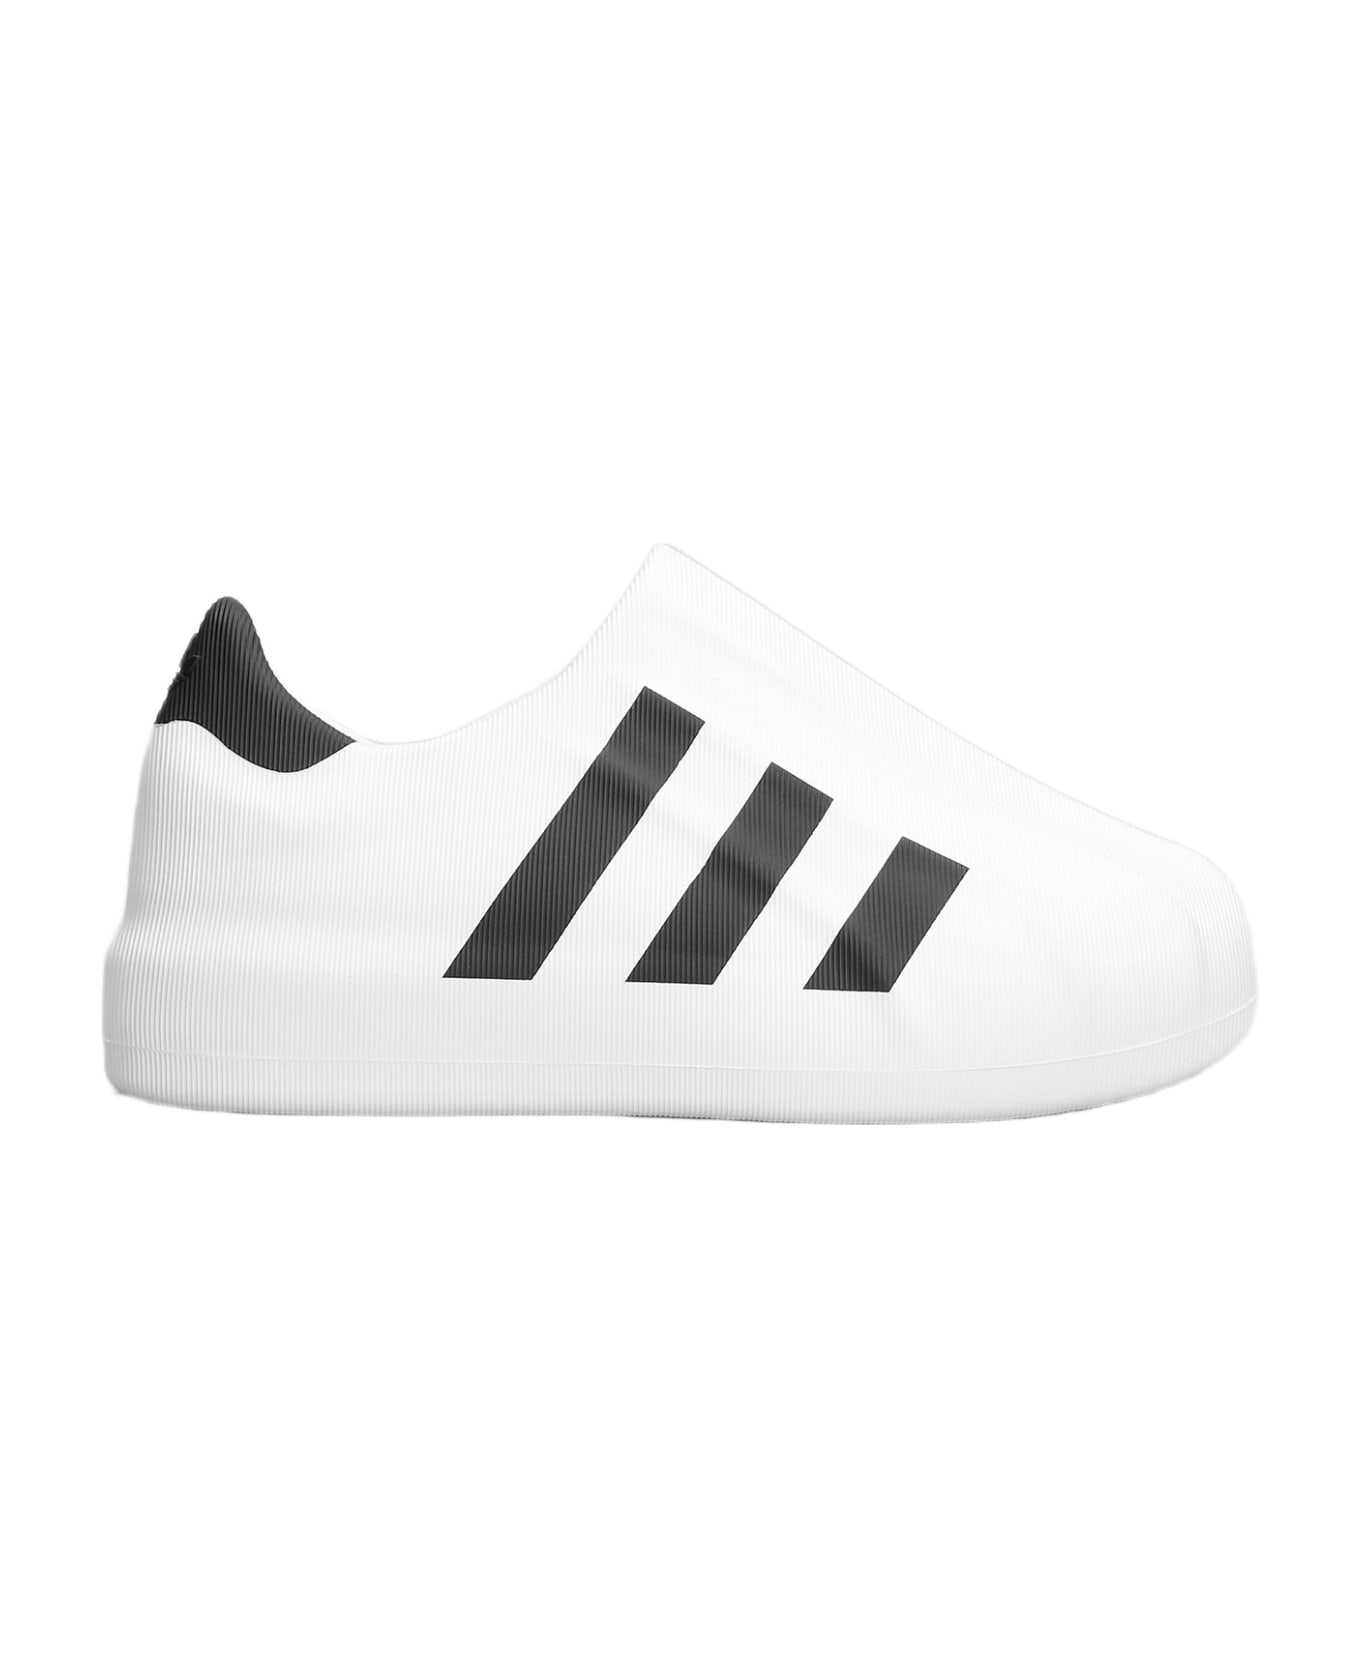 Adidas Originals Adifom Superstar Sneakers - Cwhite Cblack Cblack